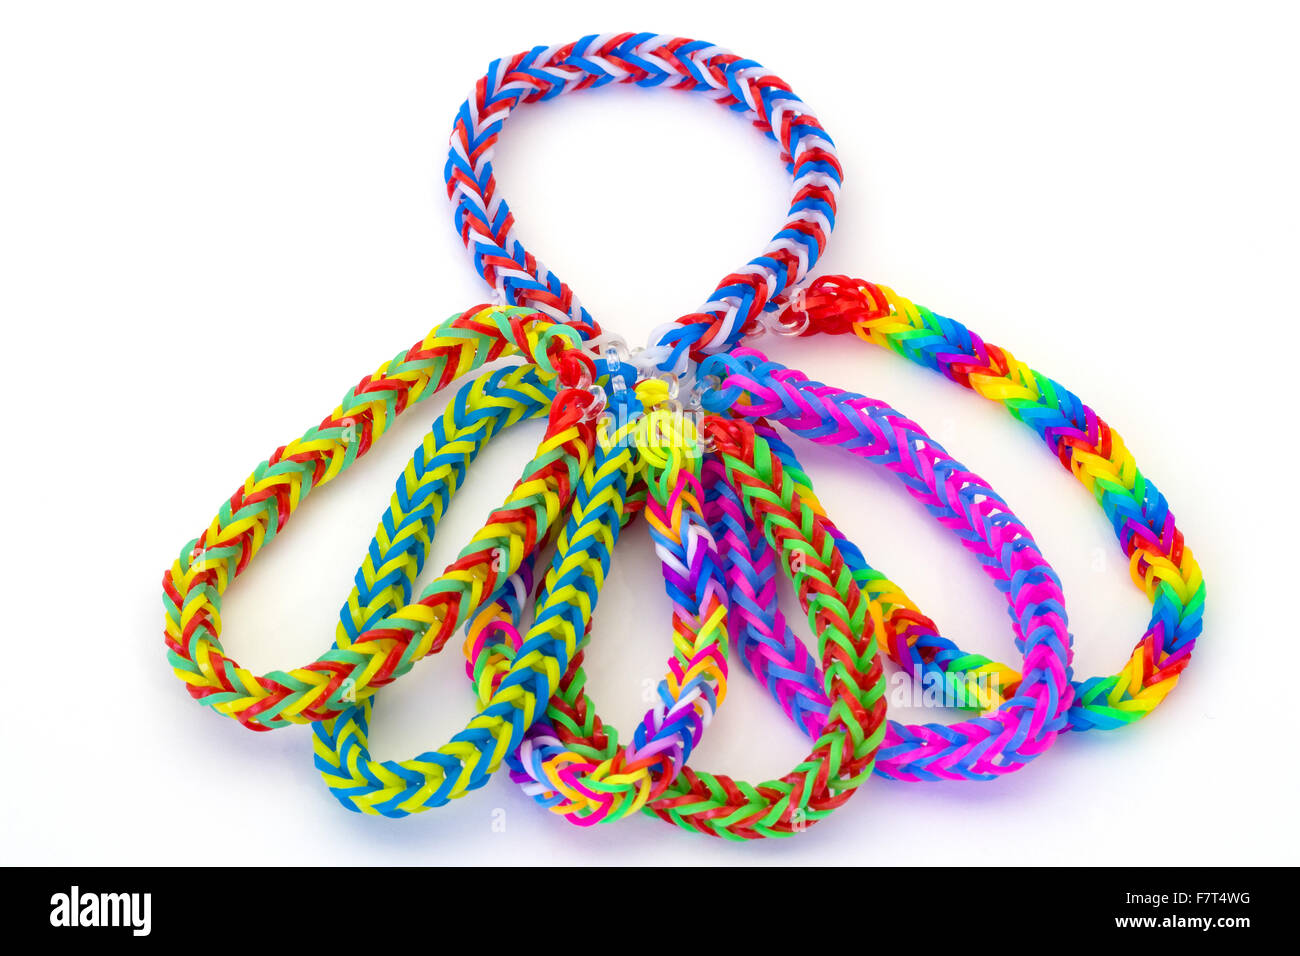 Immagini Stock - Rainbow Colors, Elastici Elastico In Silicone.  Braccialetti Elastici Colorati.. Image 67647669